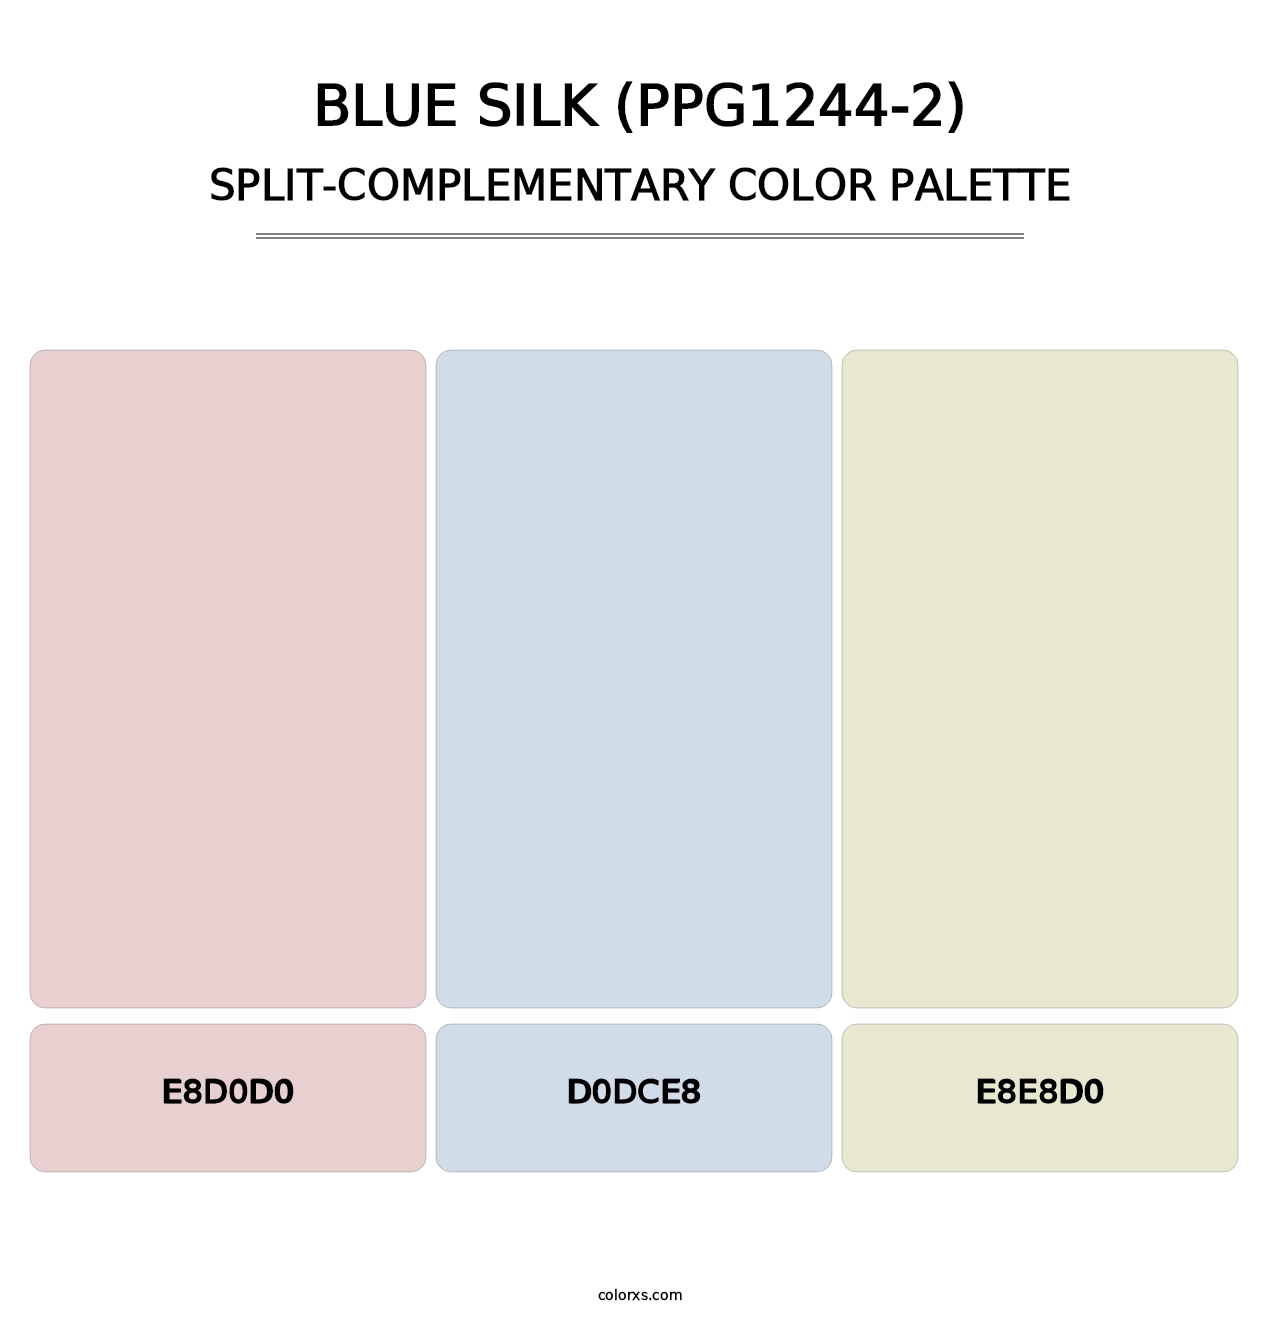 Blue Silk (PPG1244-2) - Split-Complementary Color Palette